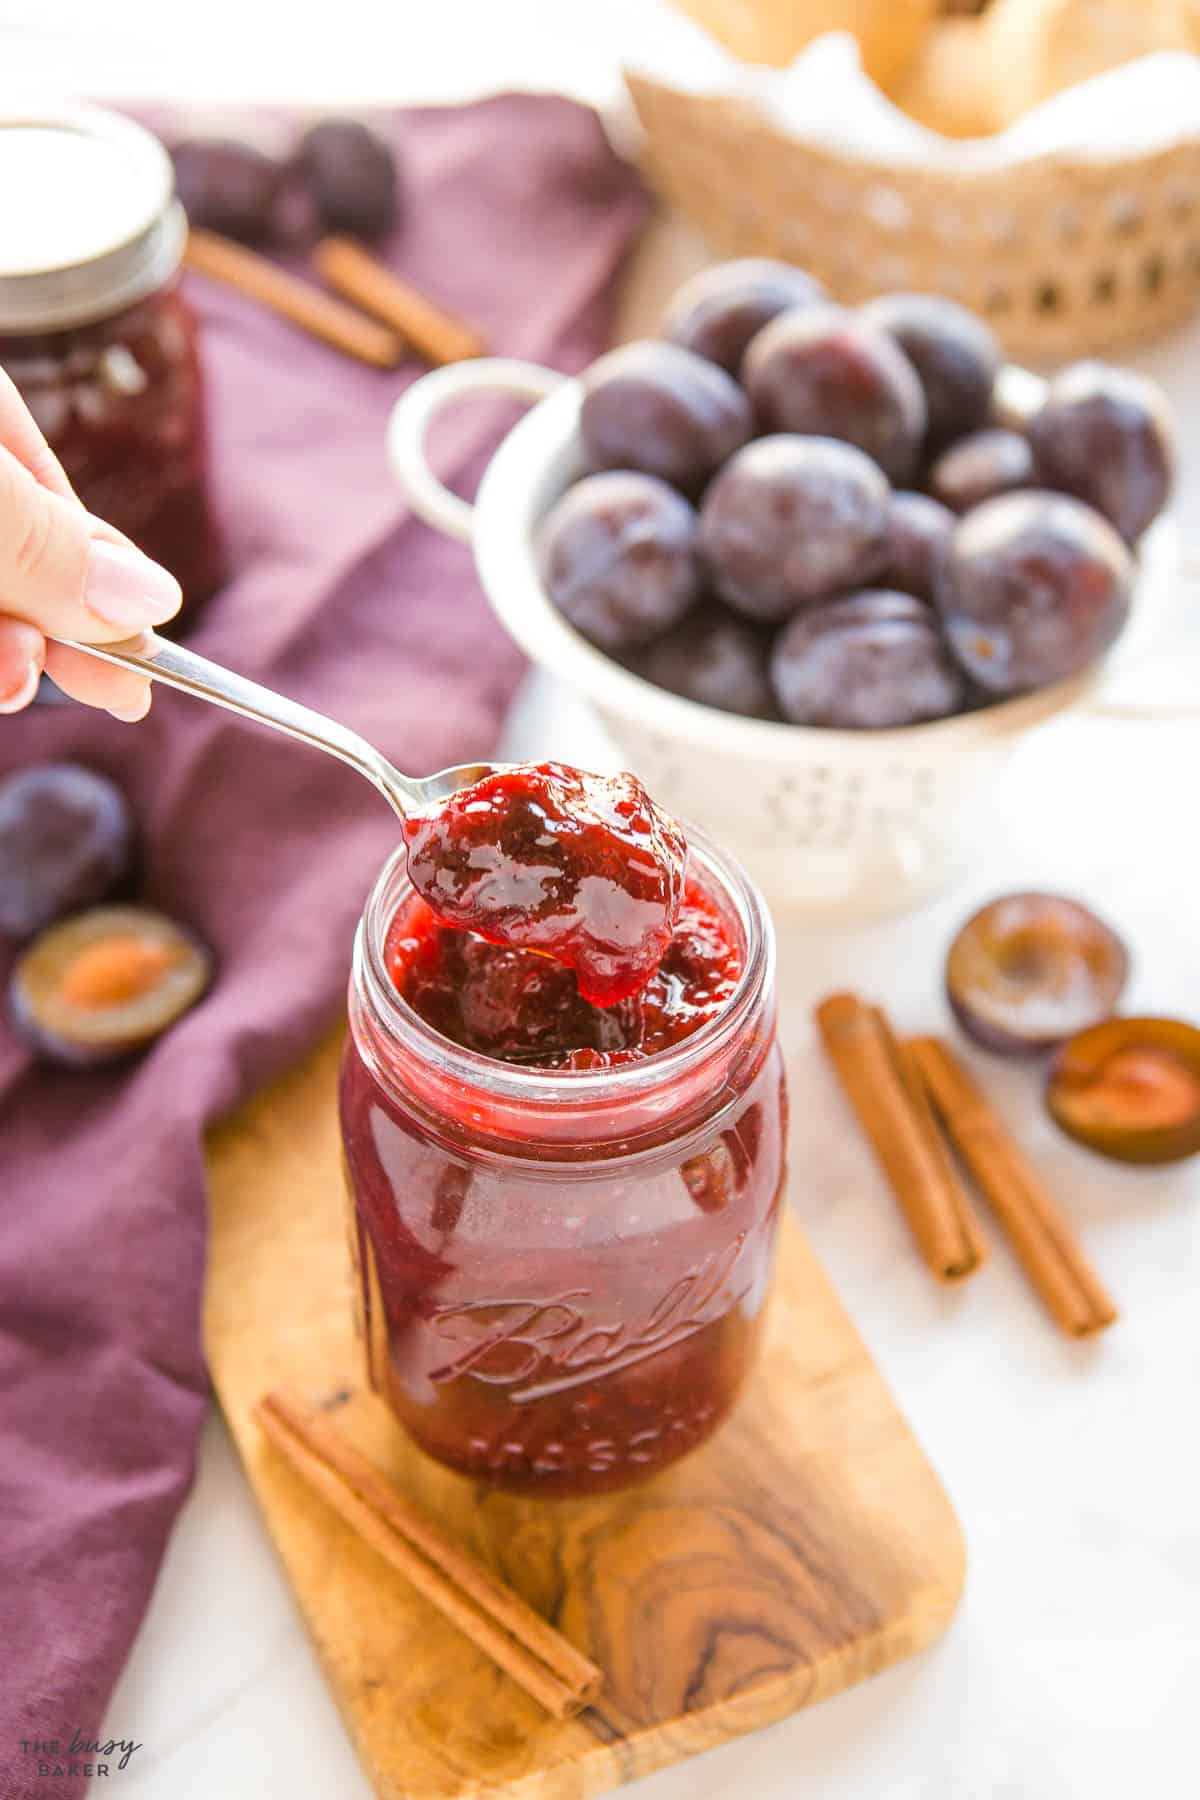 spoonful of homemade plum preserves